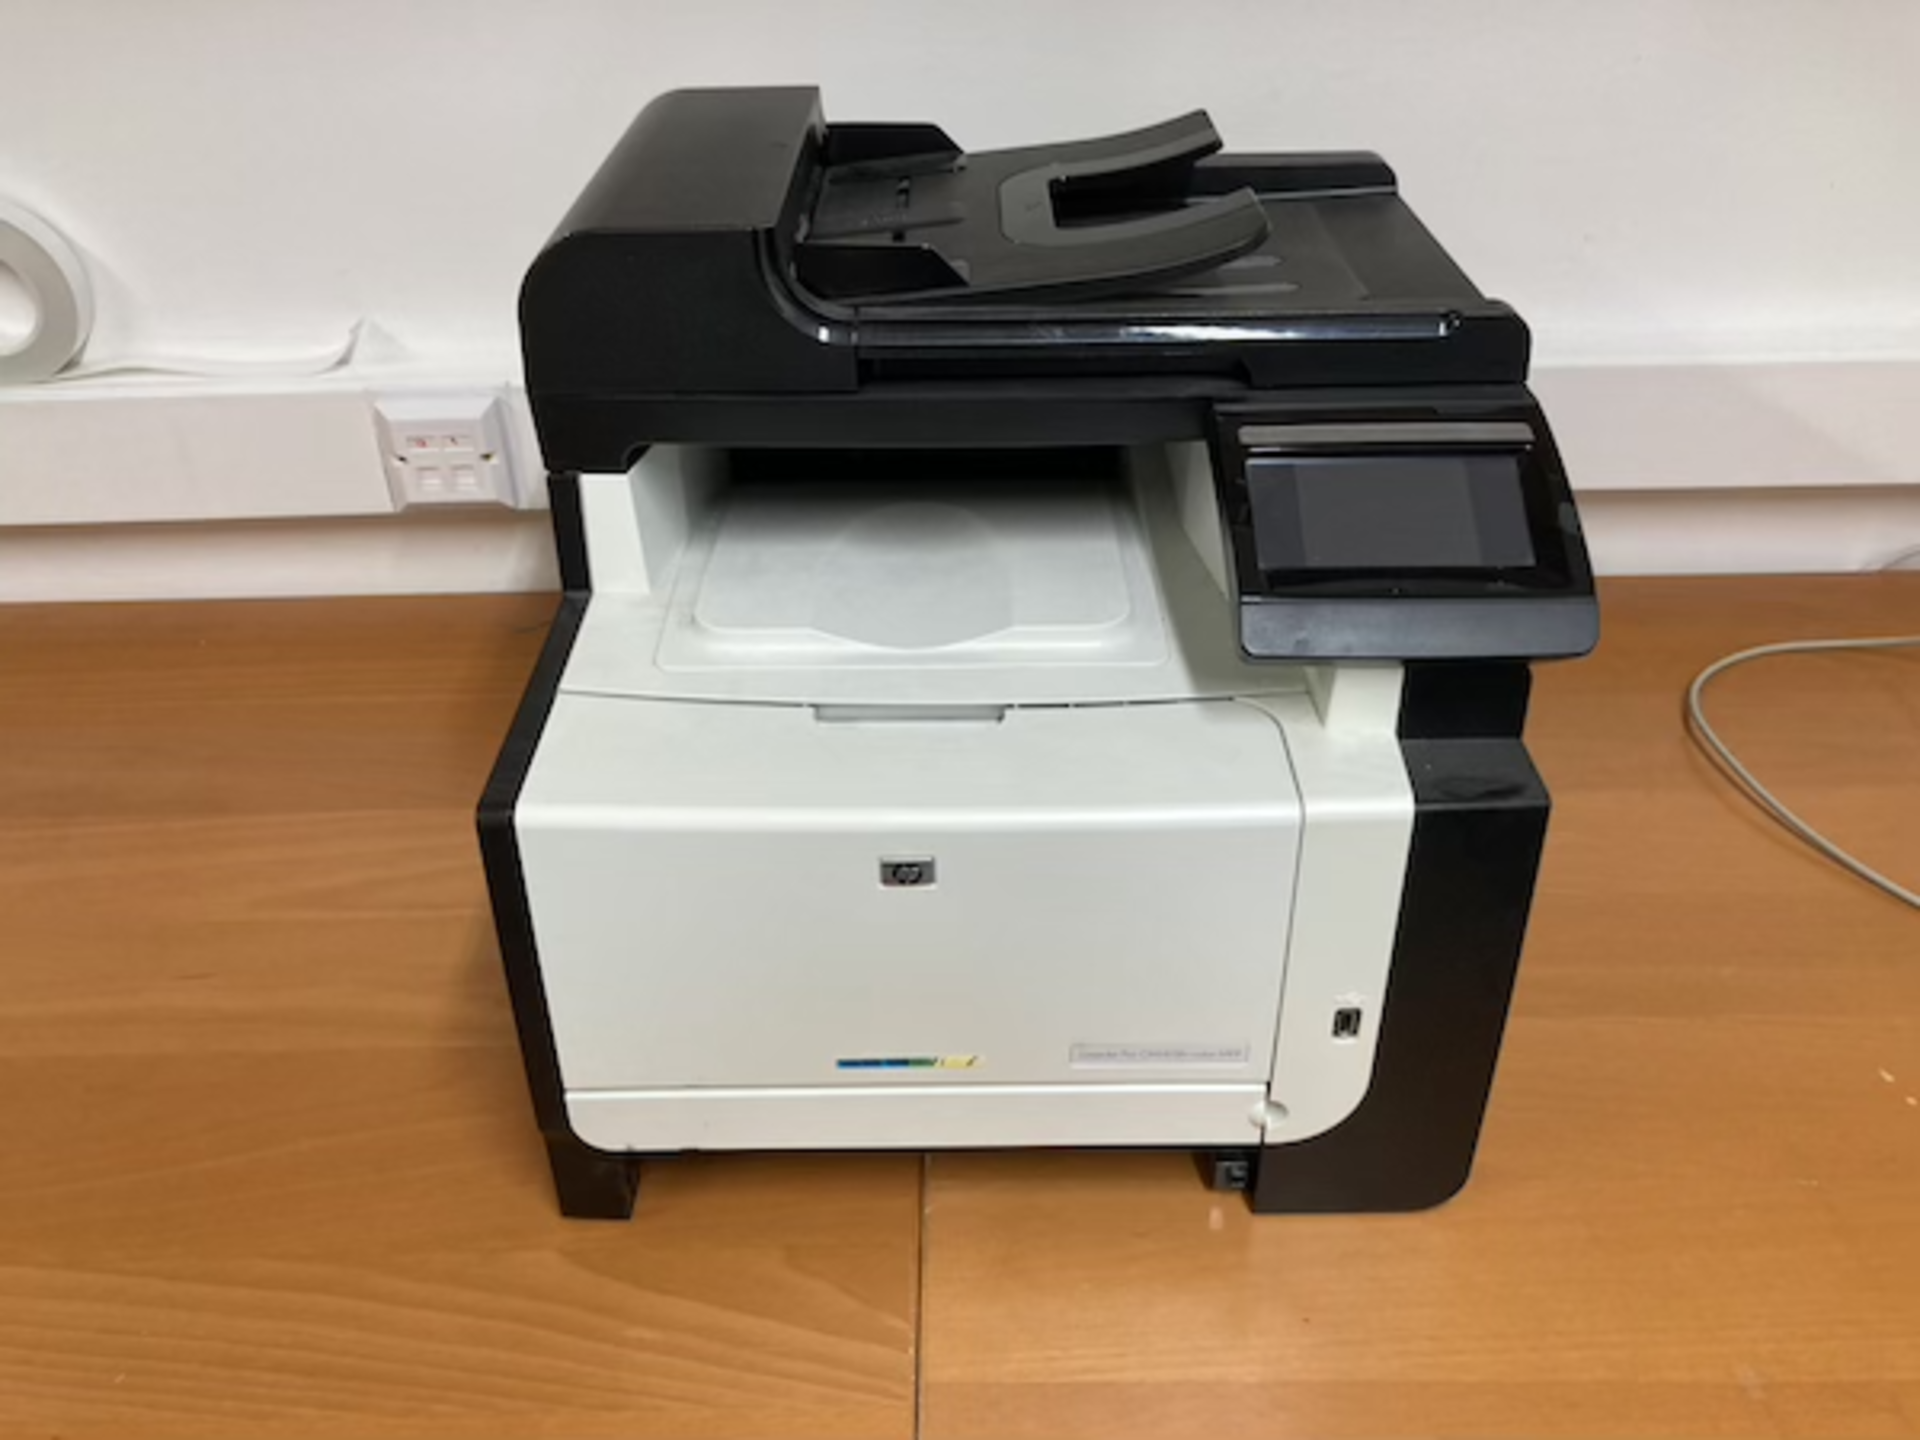 HP LaserJet Pro CM1415 colour multifunction printer